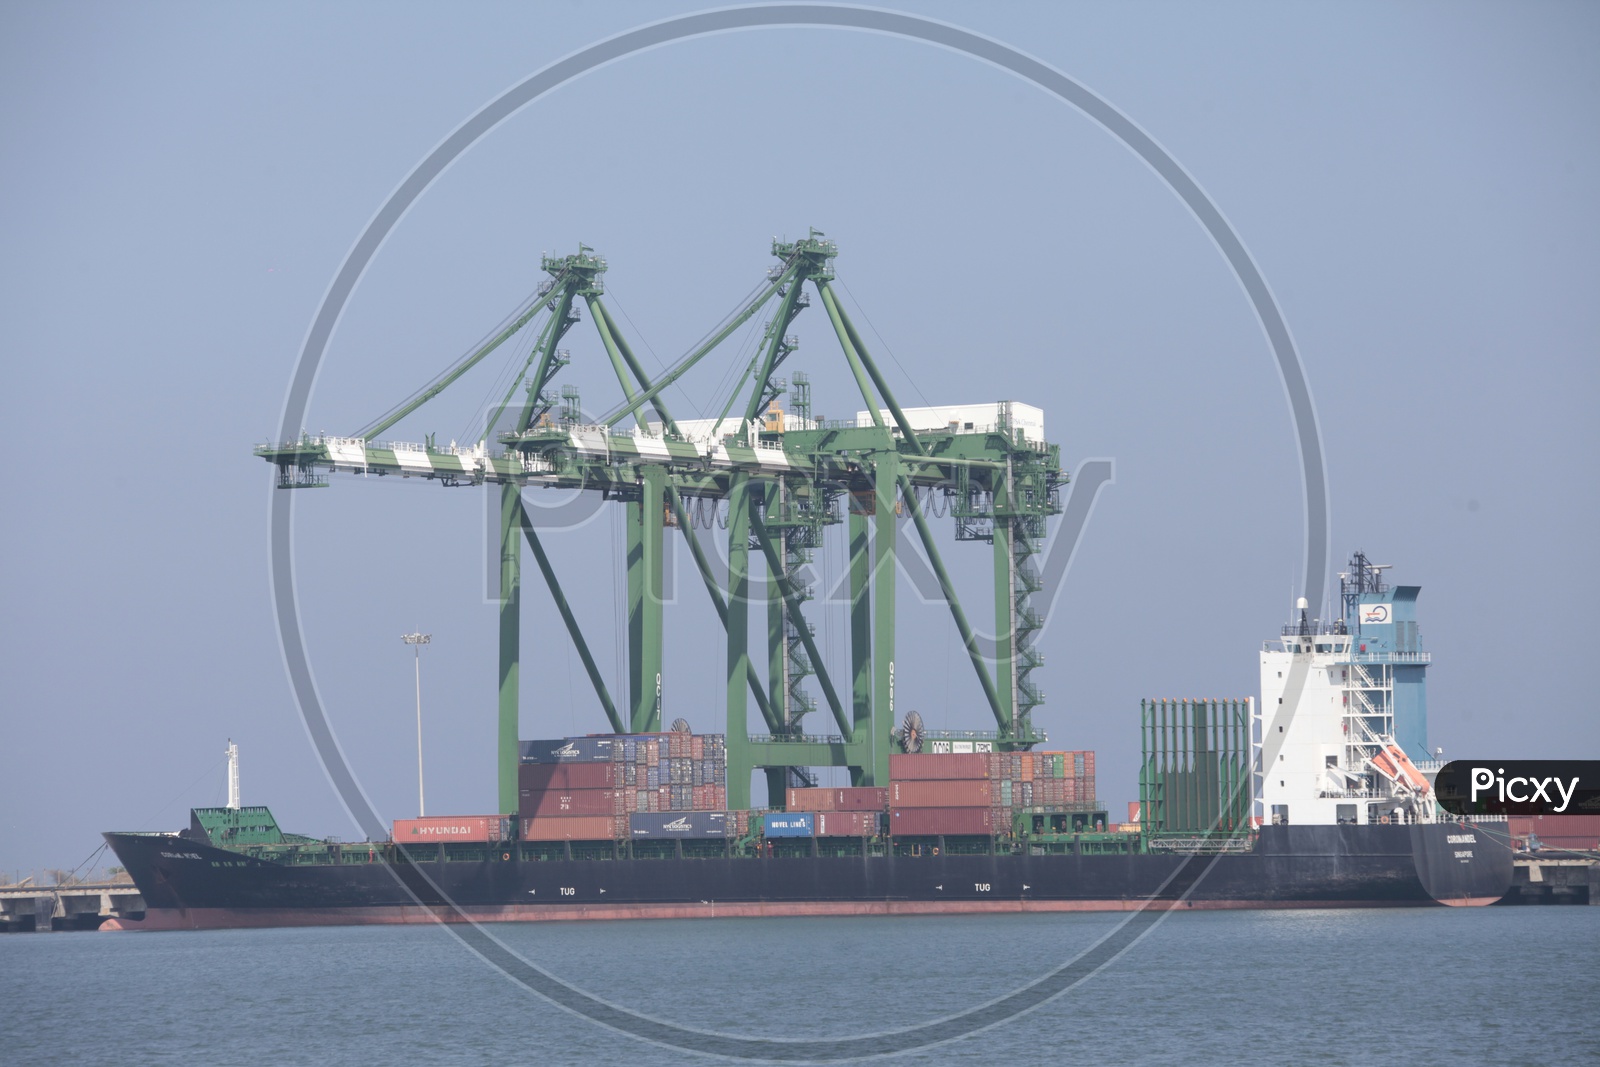 Hyundai Aframax Container alongside the port